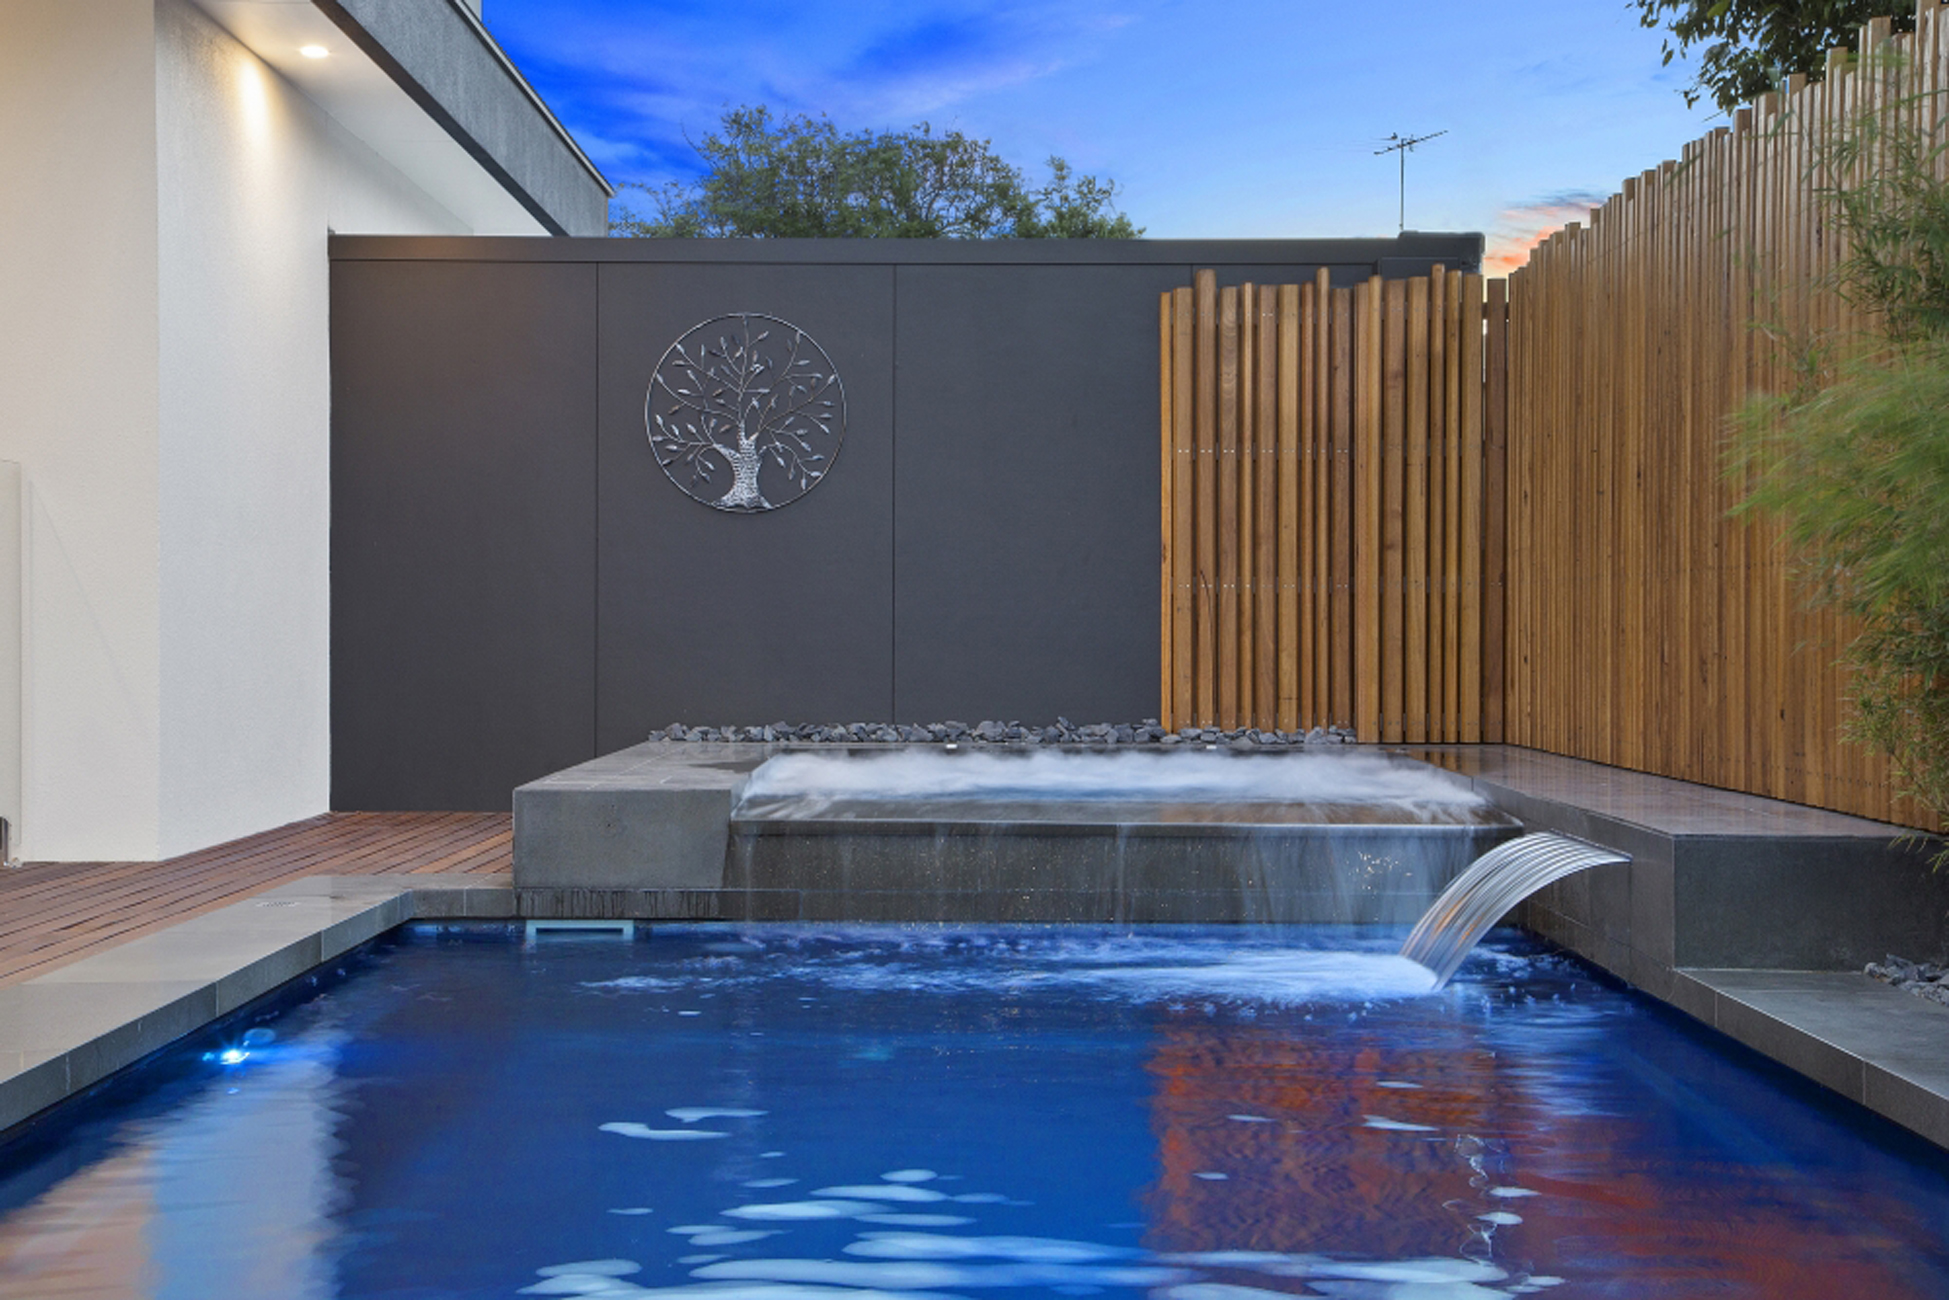 fiberglass_swimming_pool_builder_australia_gallery_neptunespa_blueagate3